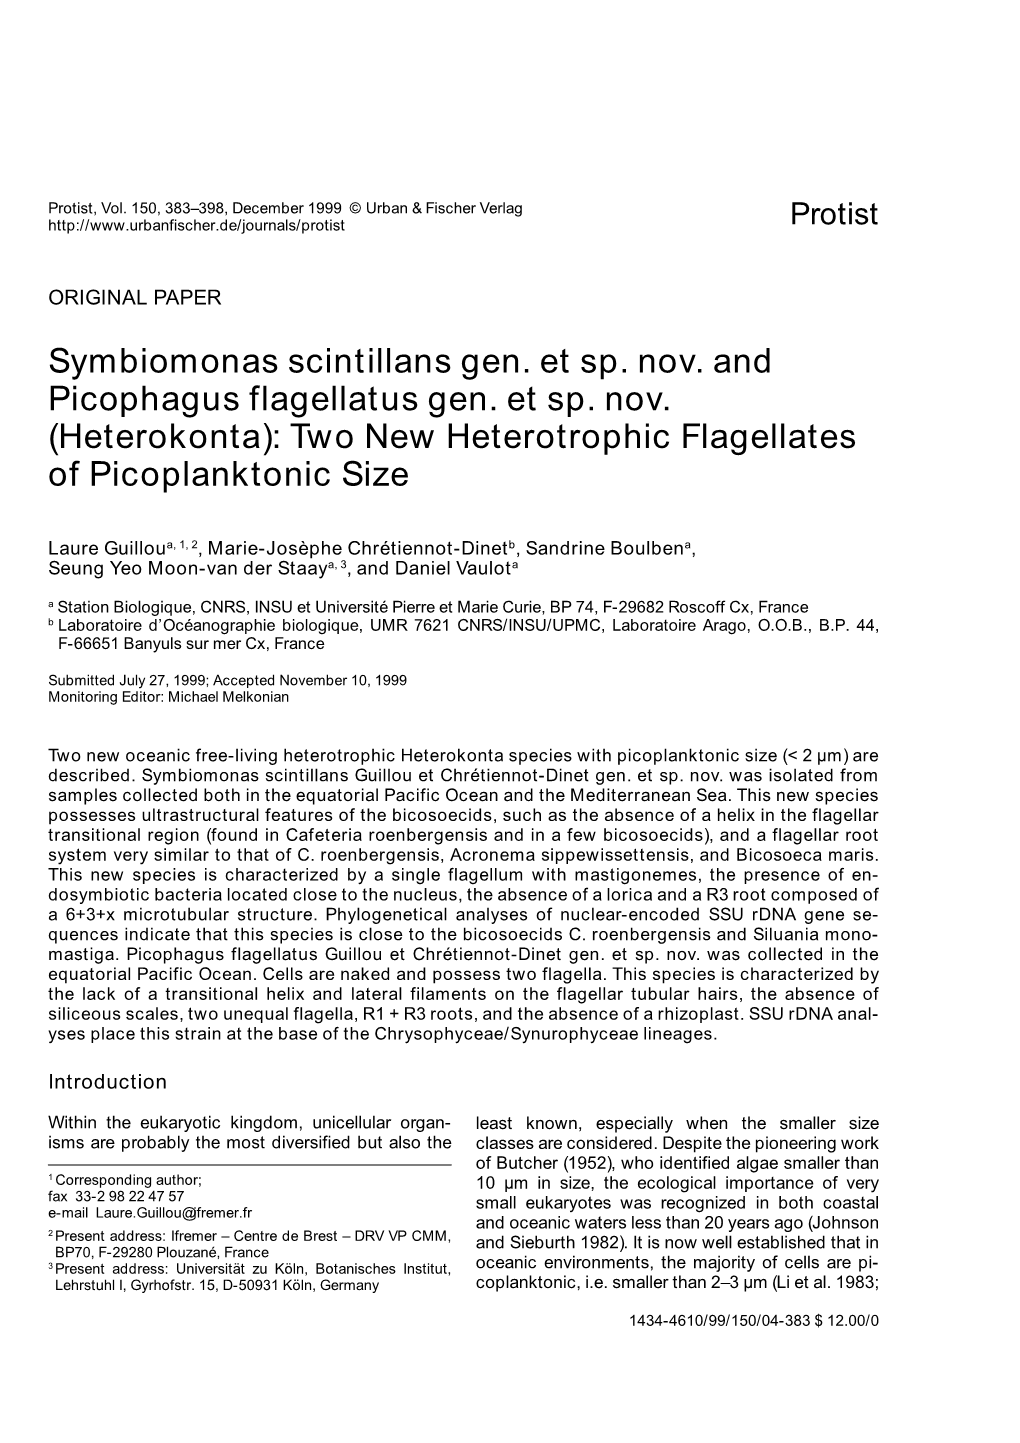 Symbiomonas Scintillans Gen. Et Sp. Nov. and Picophagus Flagellatus Gen